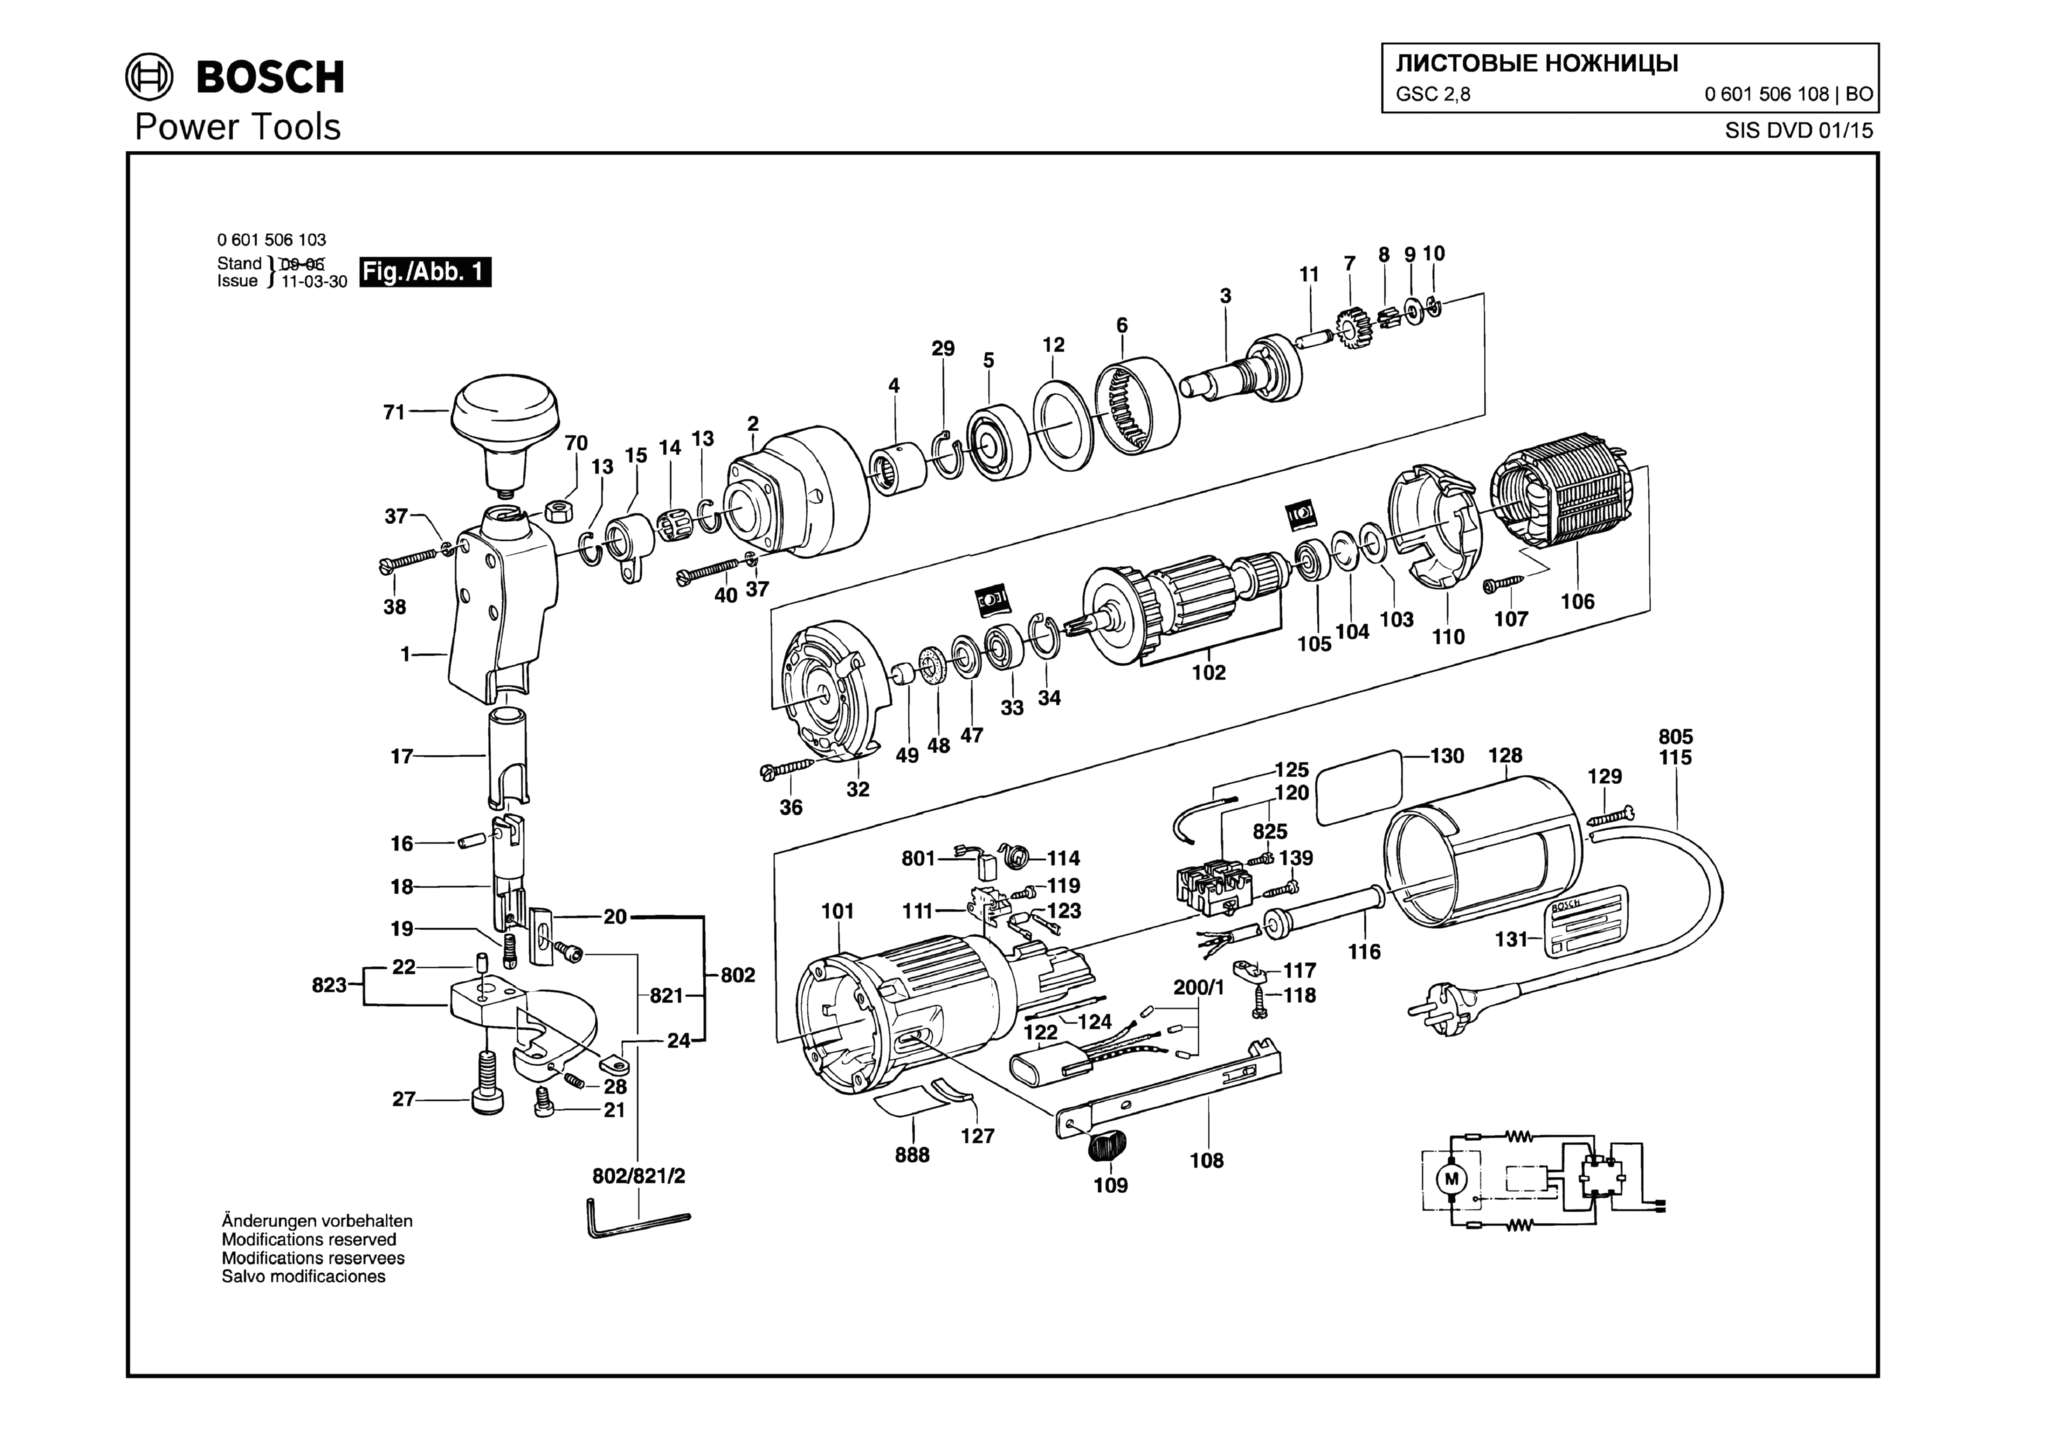 Запчасти, схема и деталировка Bosch GSC 2,8 (ТИП 0601506108)